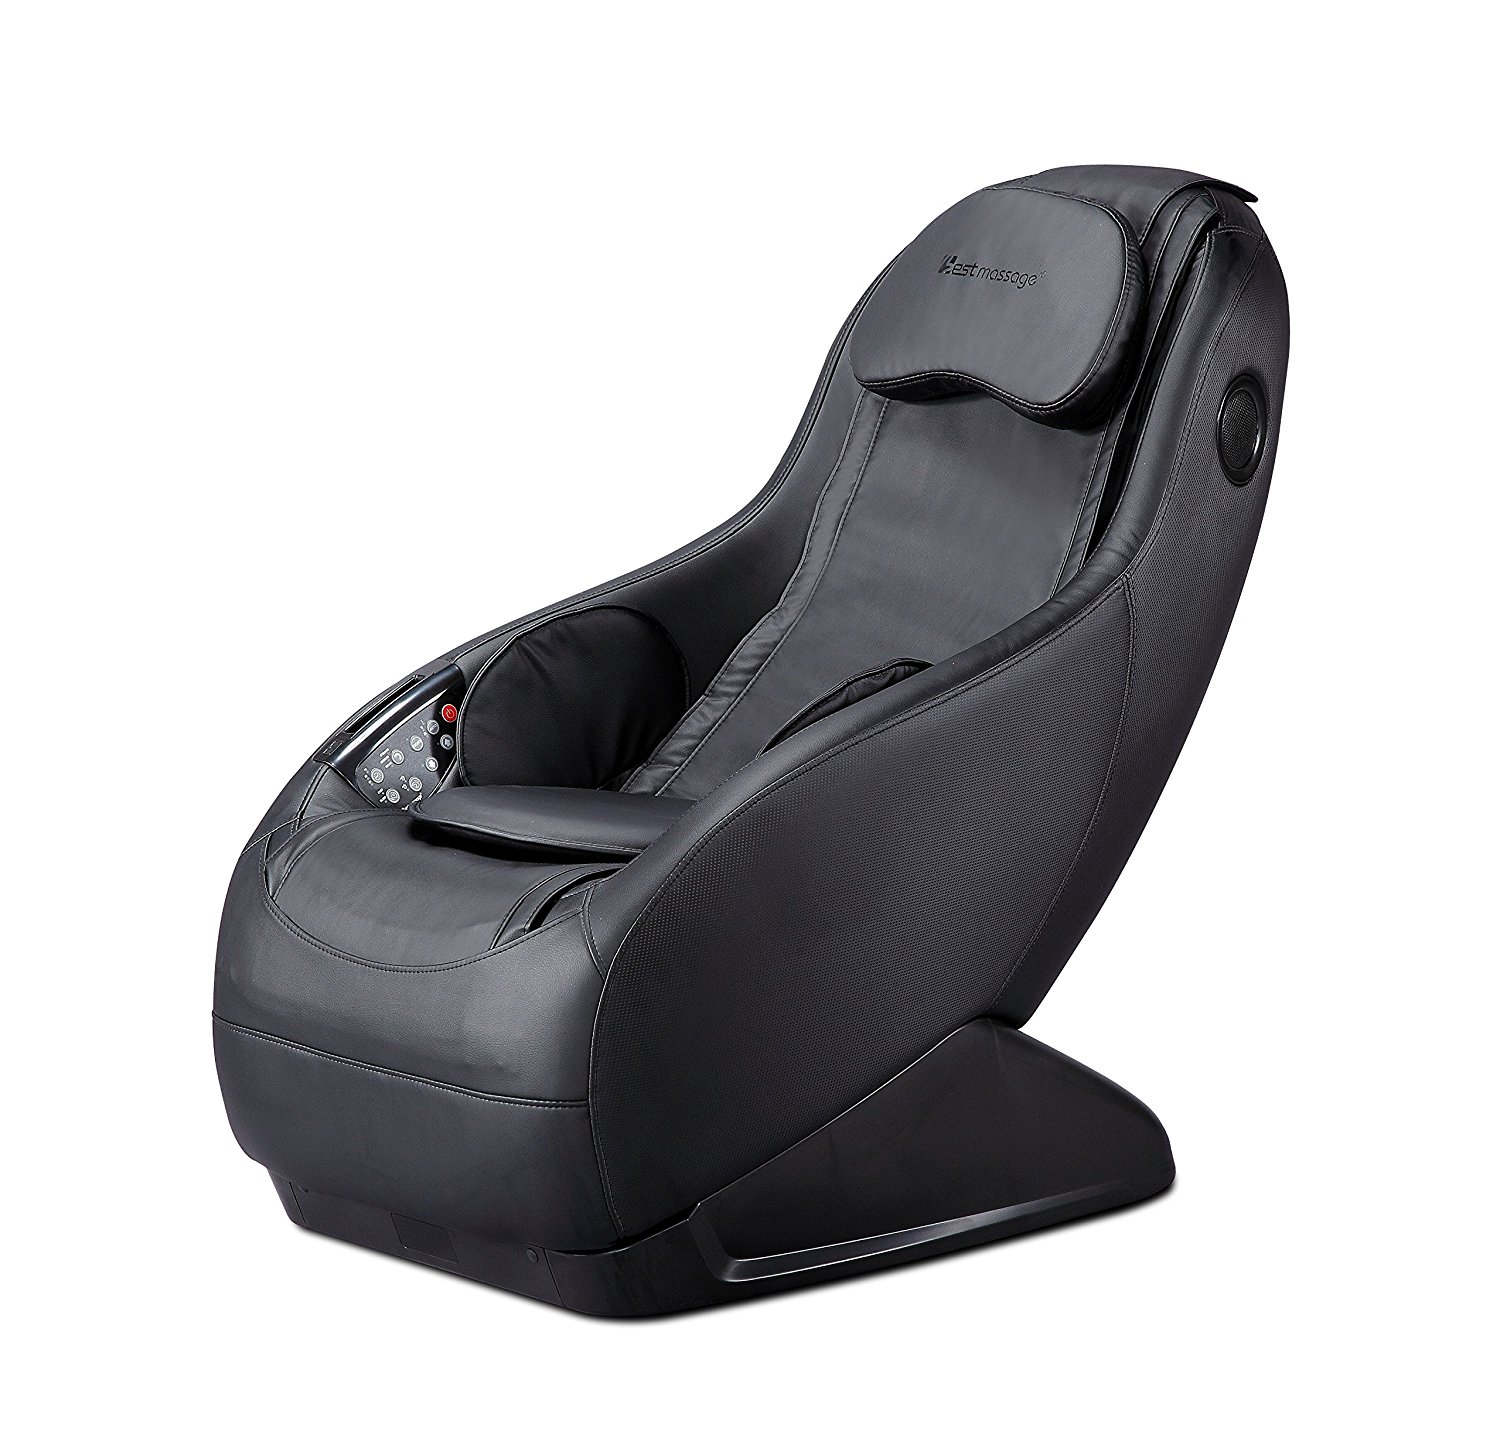 Deluxe Gaming Massage Chair - Walmart.com